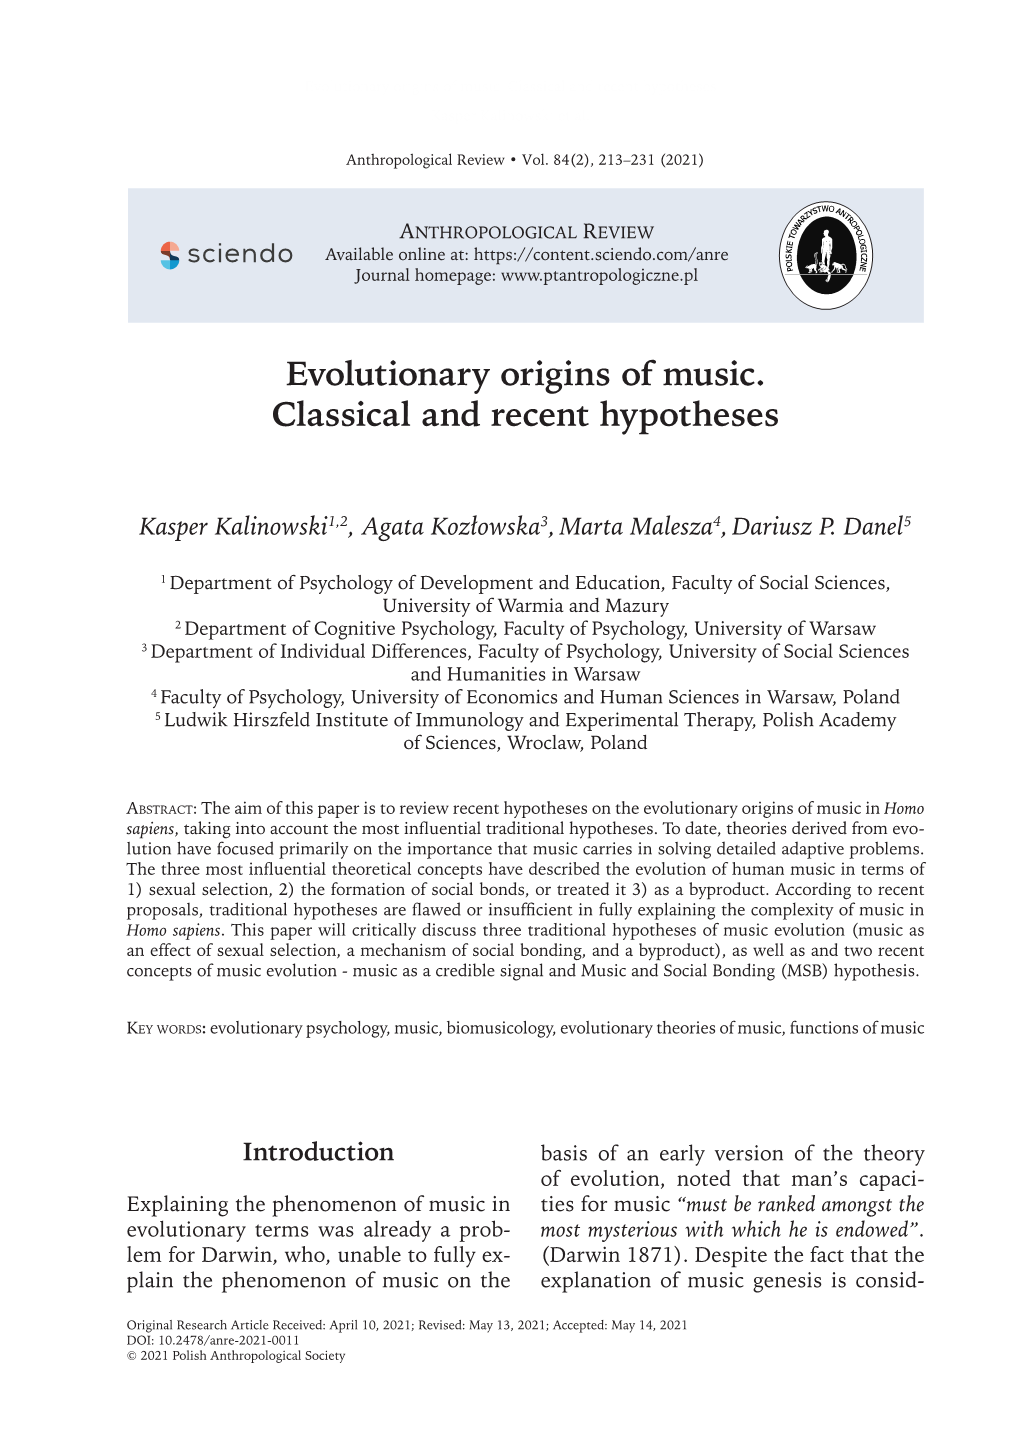 Evolutionary Origins of Music. Classical and Recent Hypotheses Kasper Kalinowski Et Al